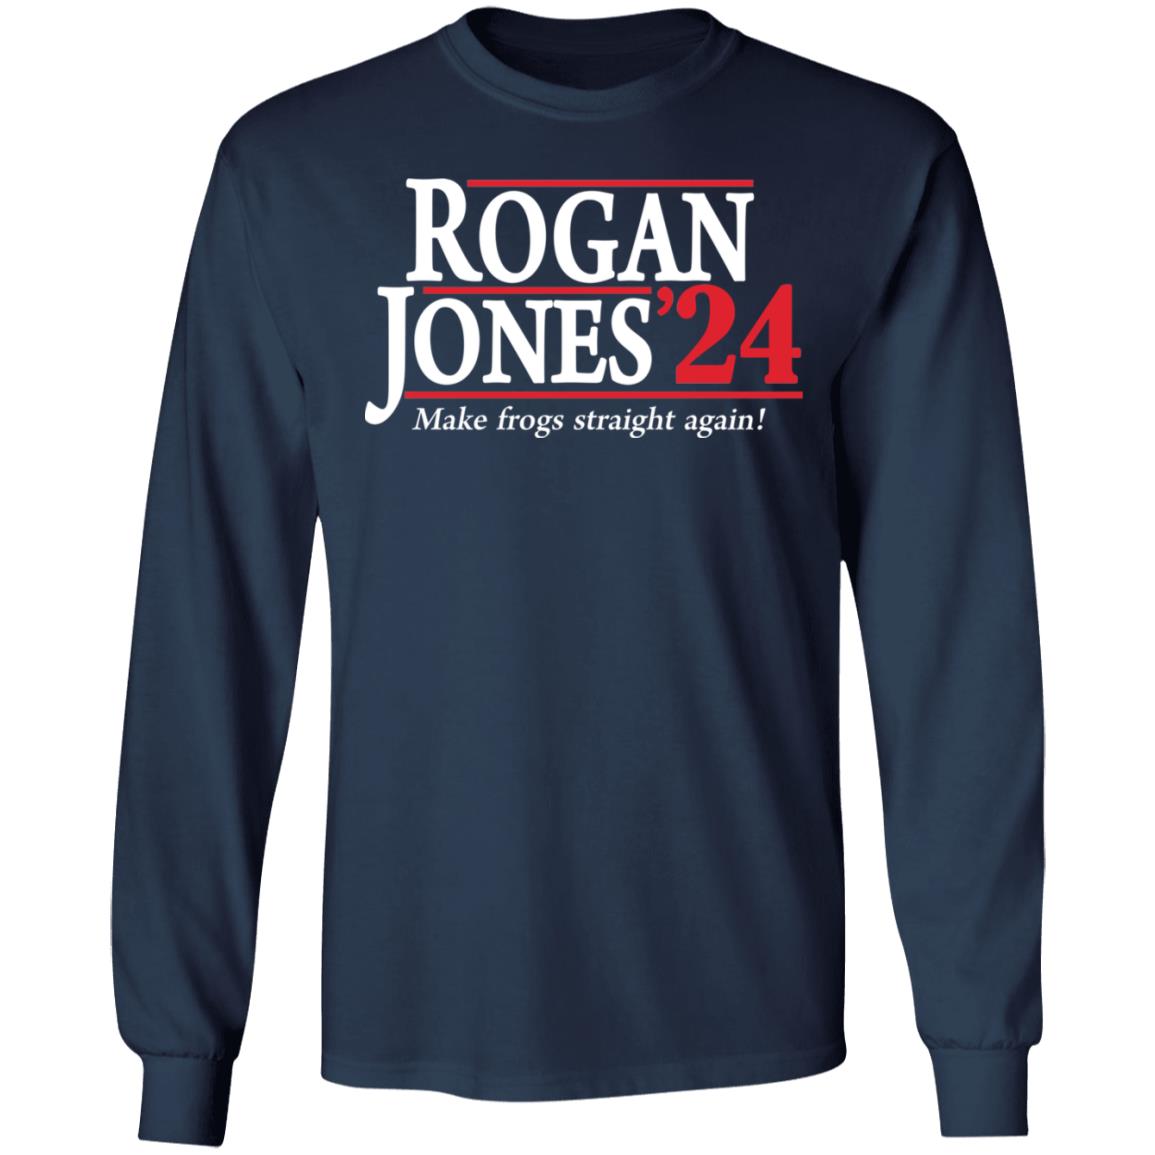 Rogan Jones 24 make frogs straight again shirt, hoodie